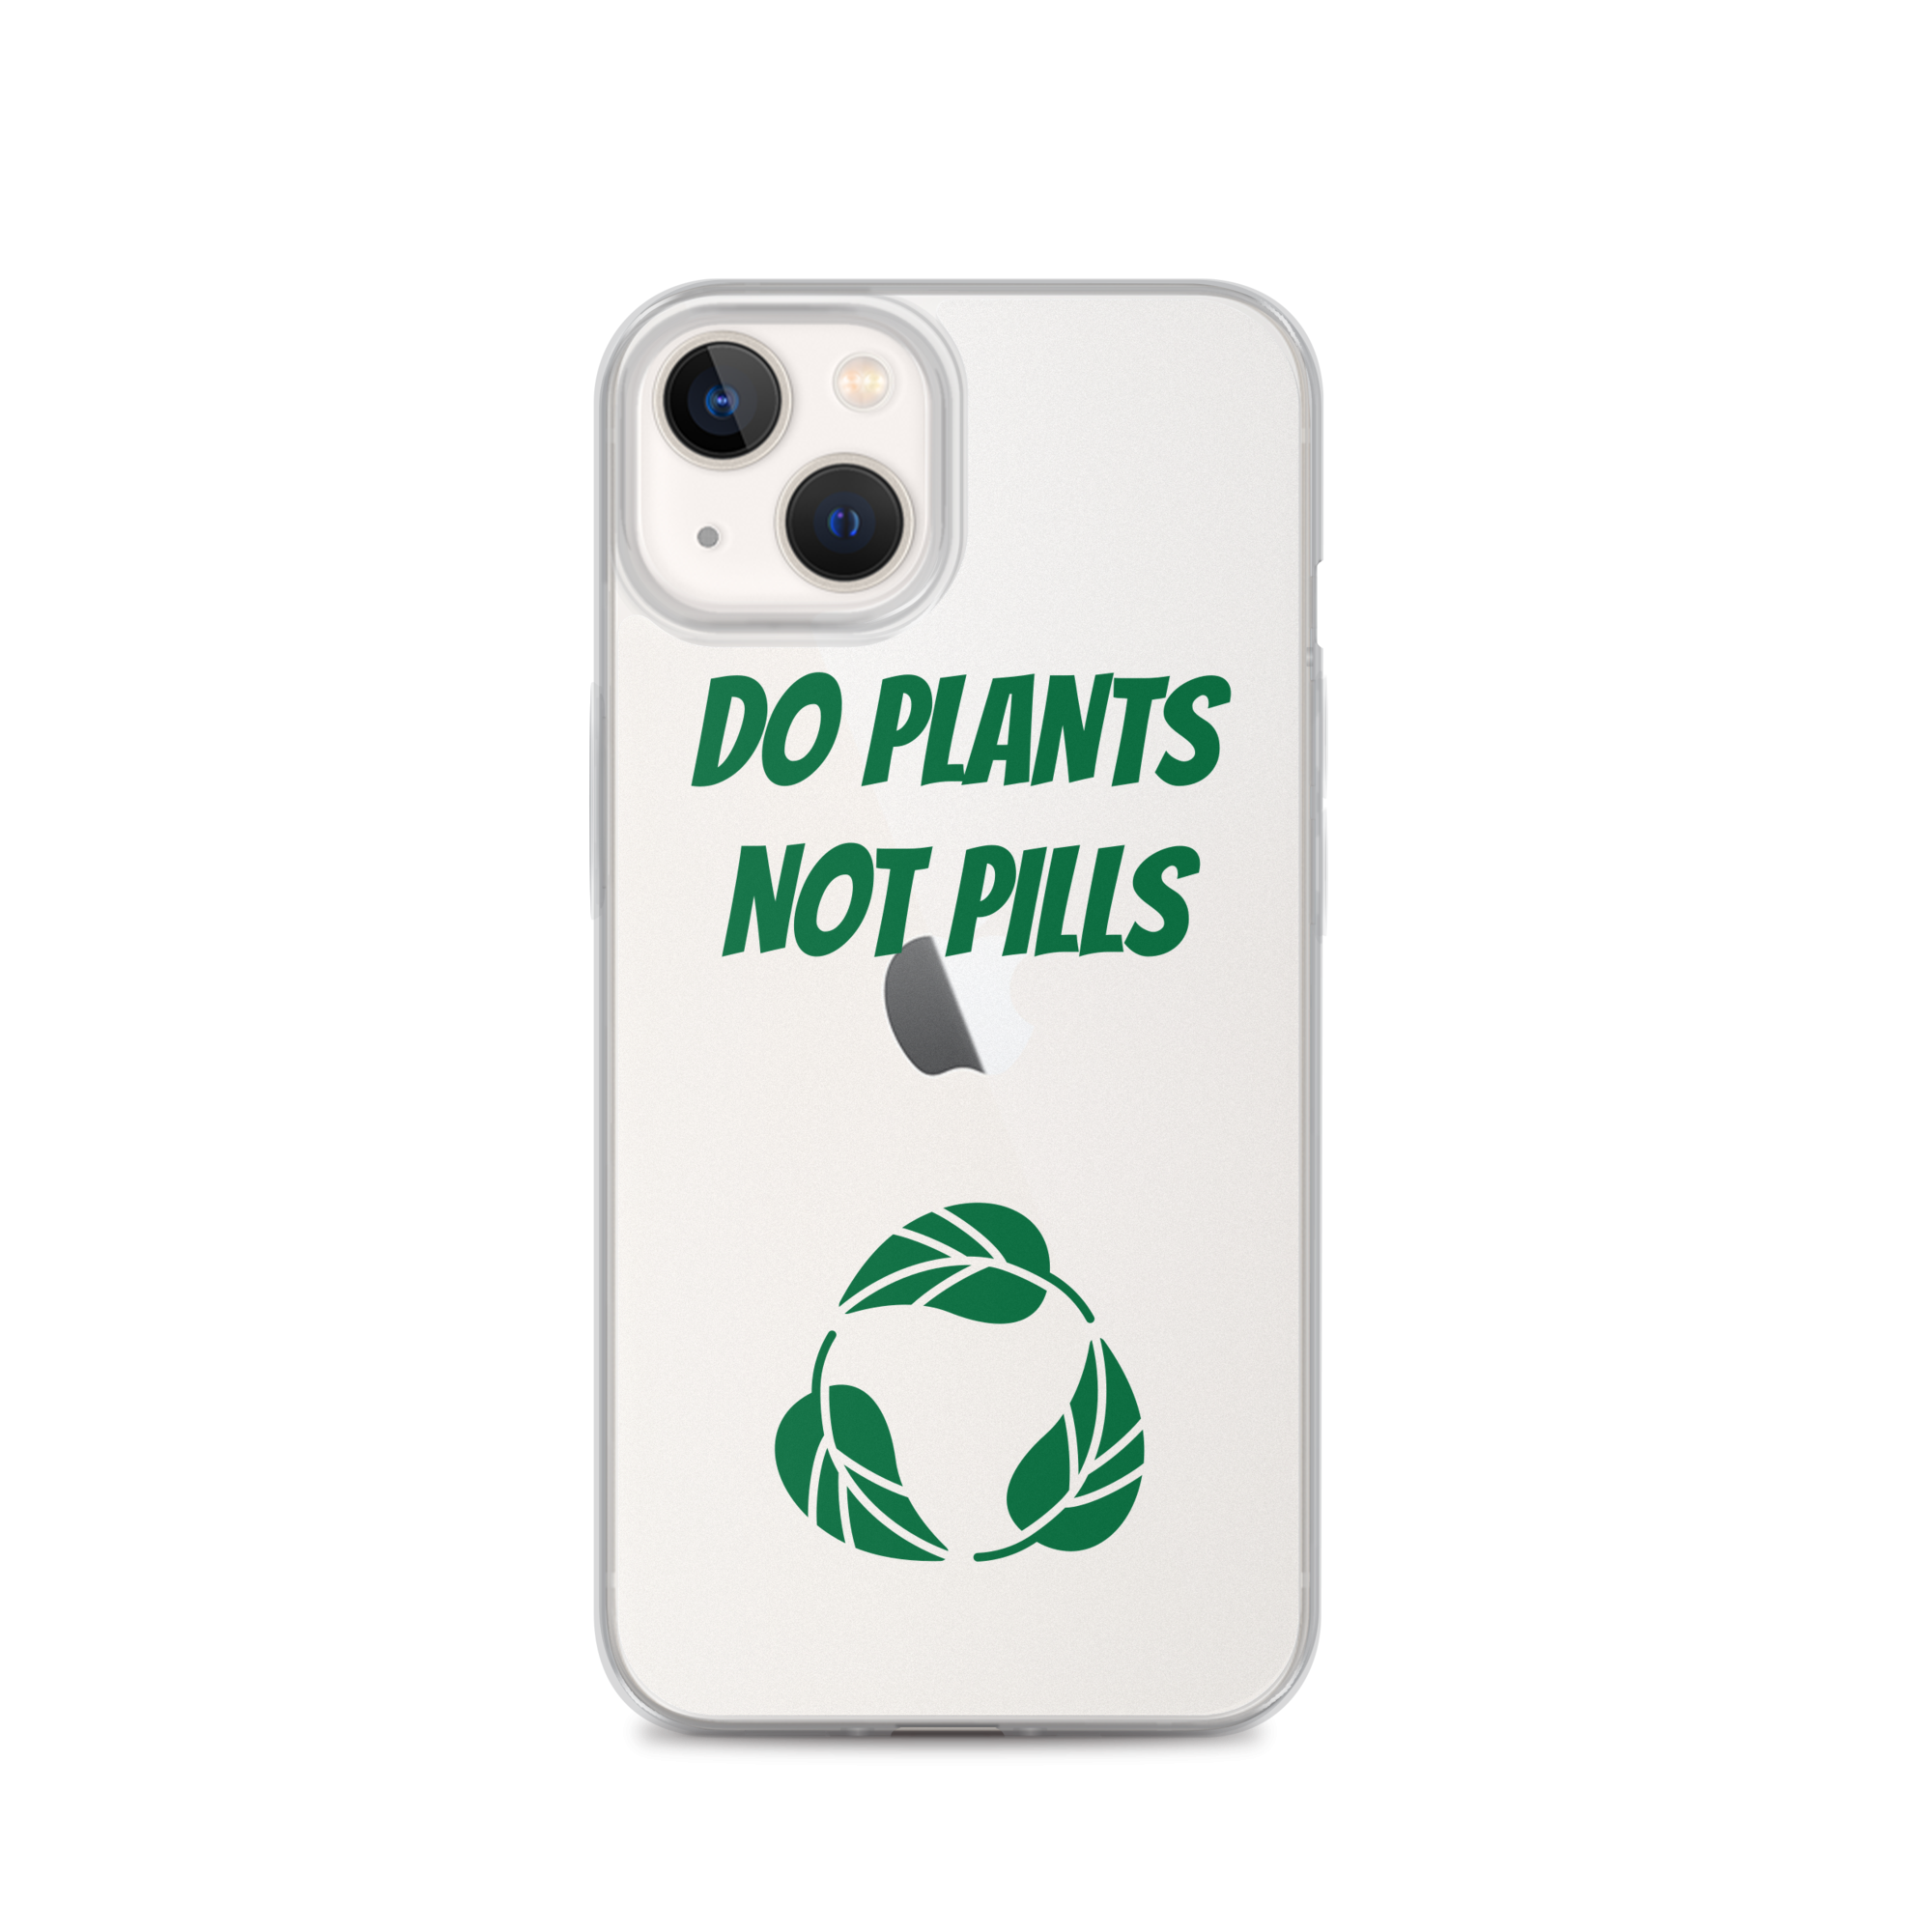 Do Plants Not Pills iPhone Case